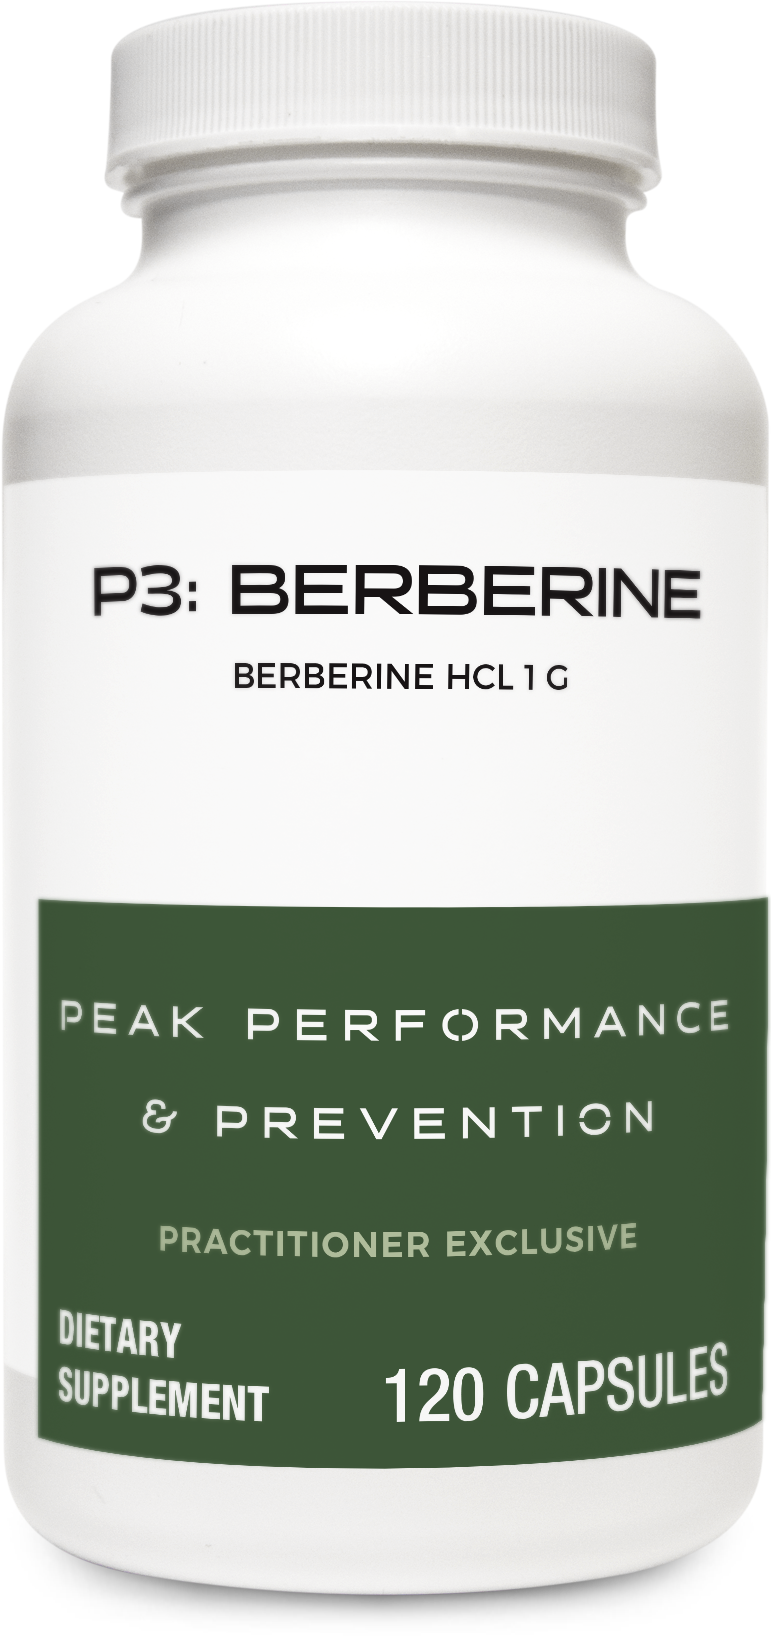 P3: Berberine